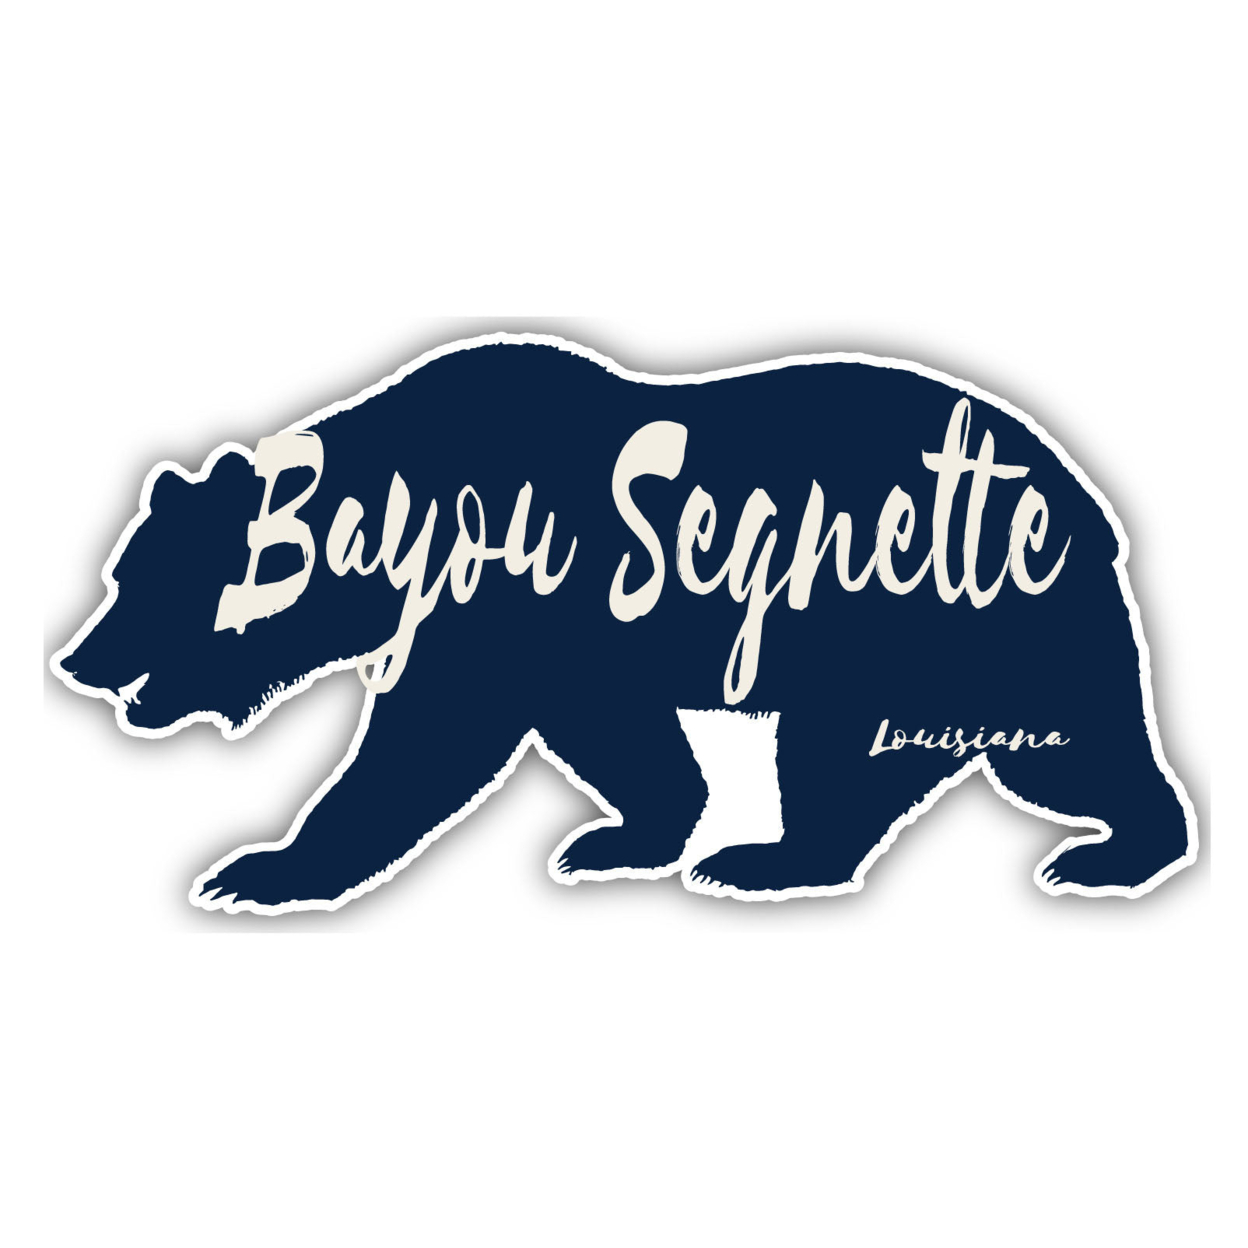 Bayou Segnette Louisiana Souvenir Decorative Stickers (Choose Theme And Size) - Single Unit, 12-Inch, Bear